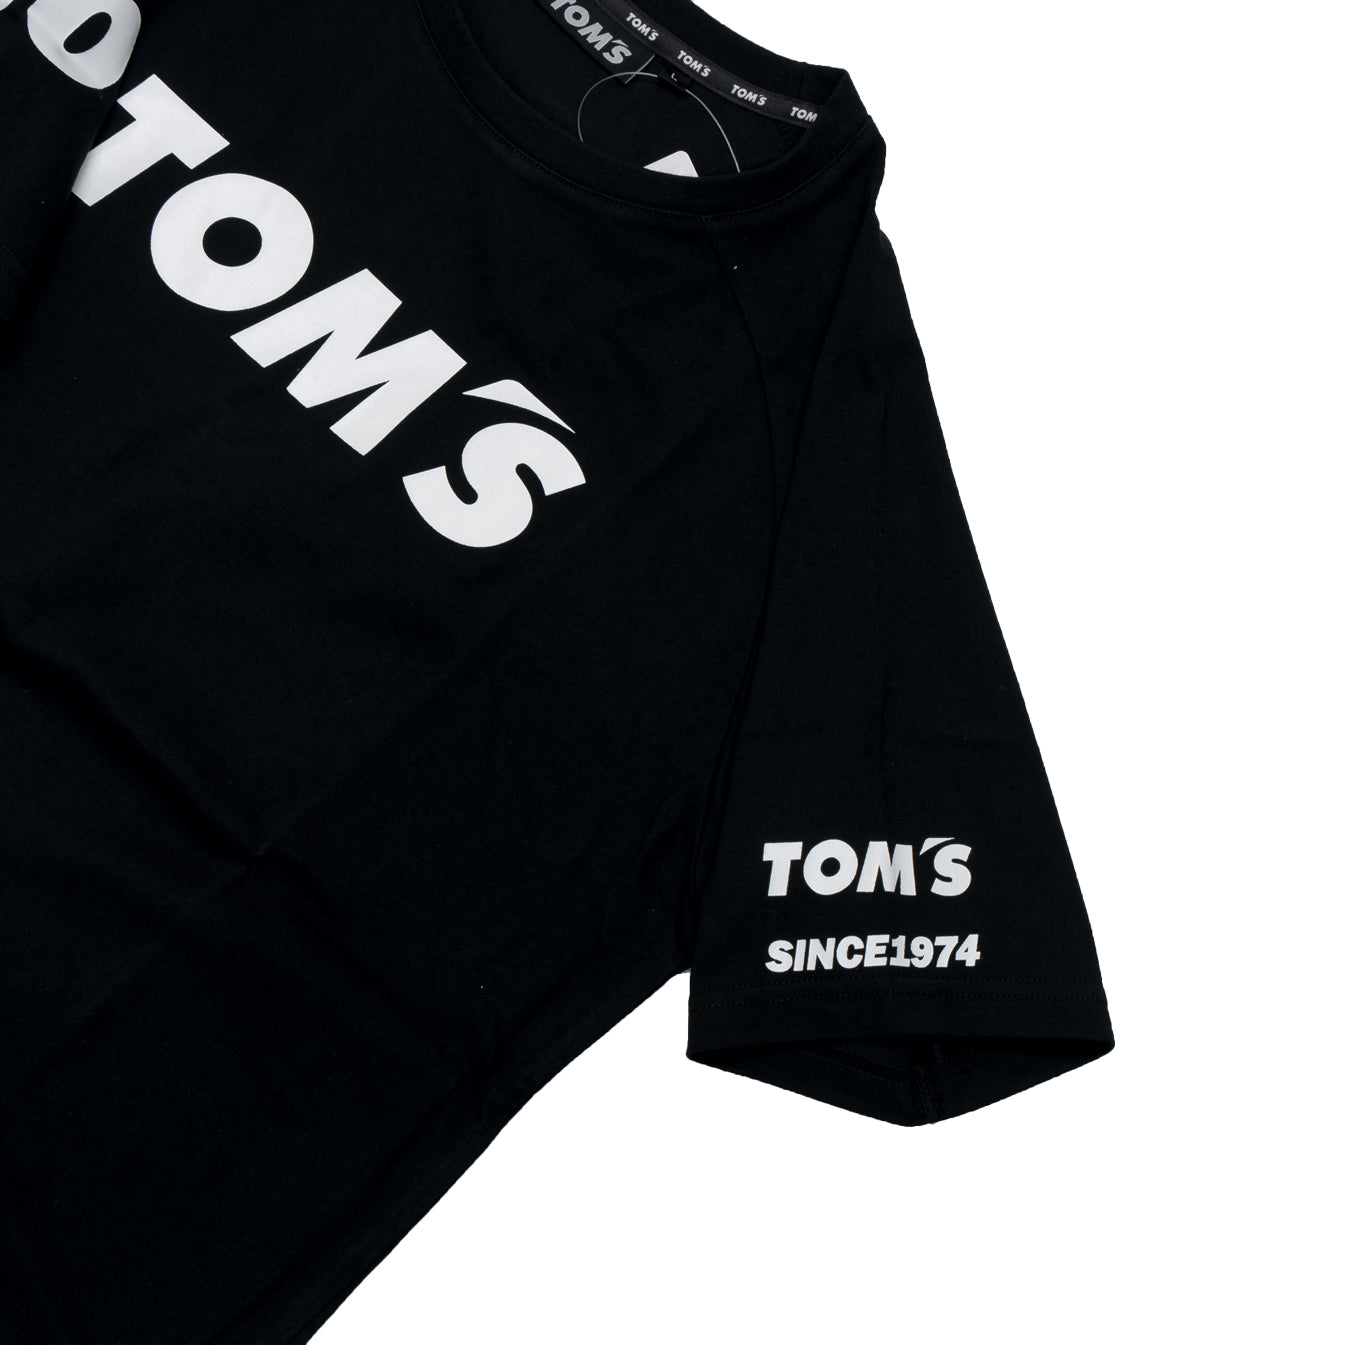 TOM'S Racing - Short Sleeve T-shirt #36 Black